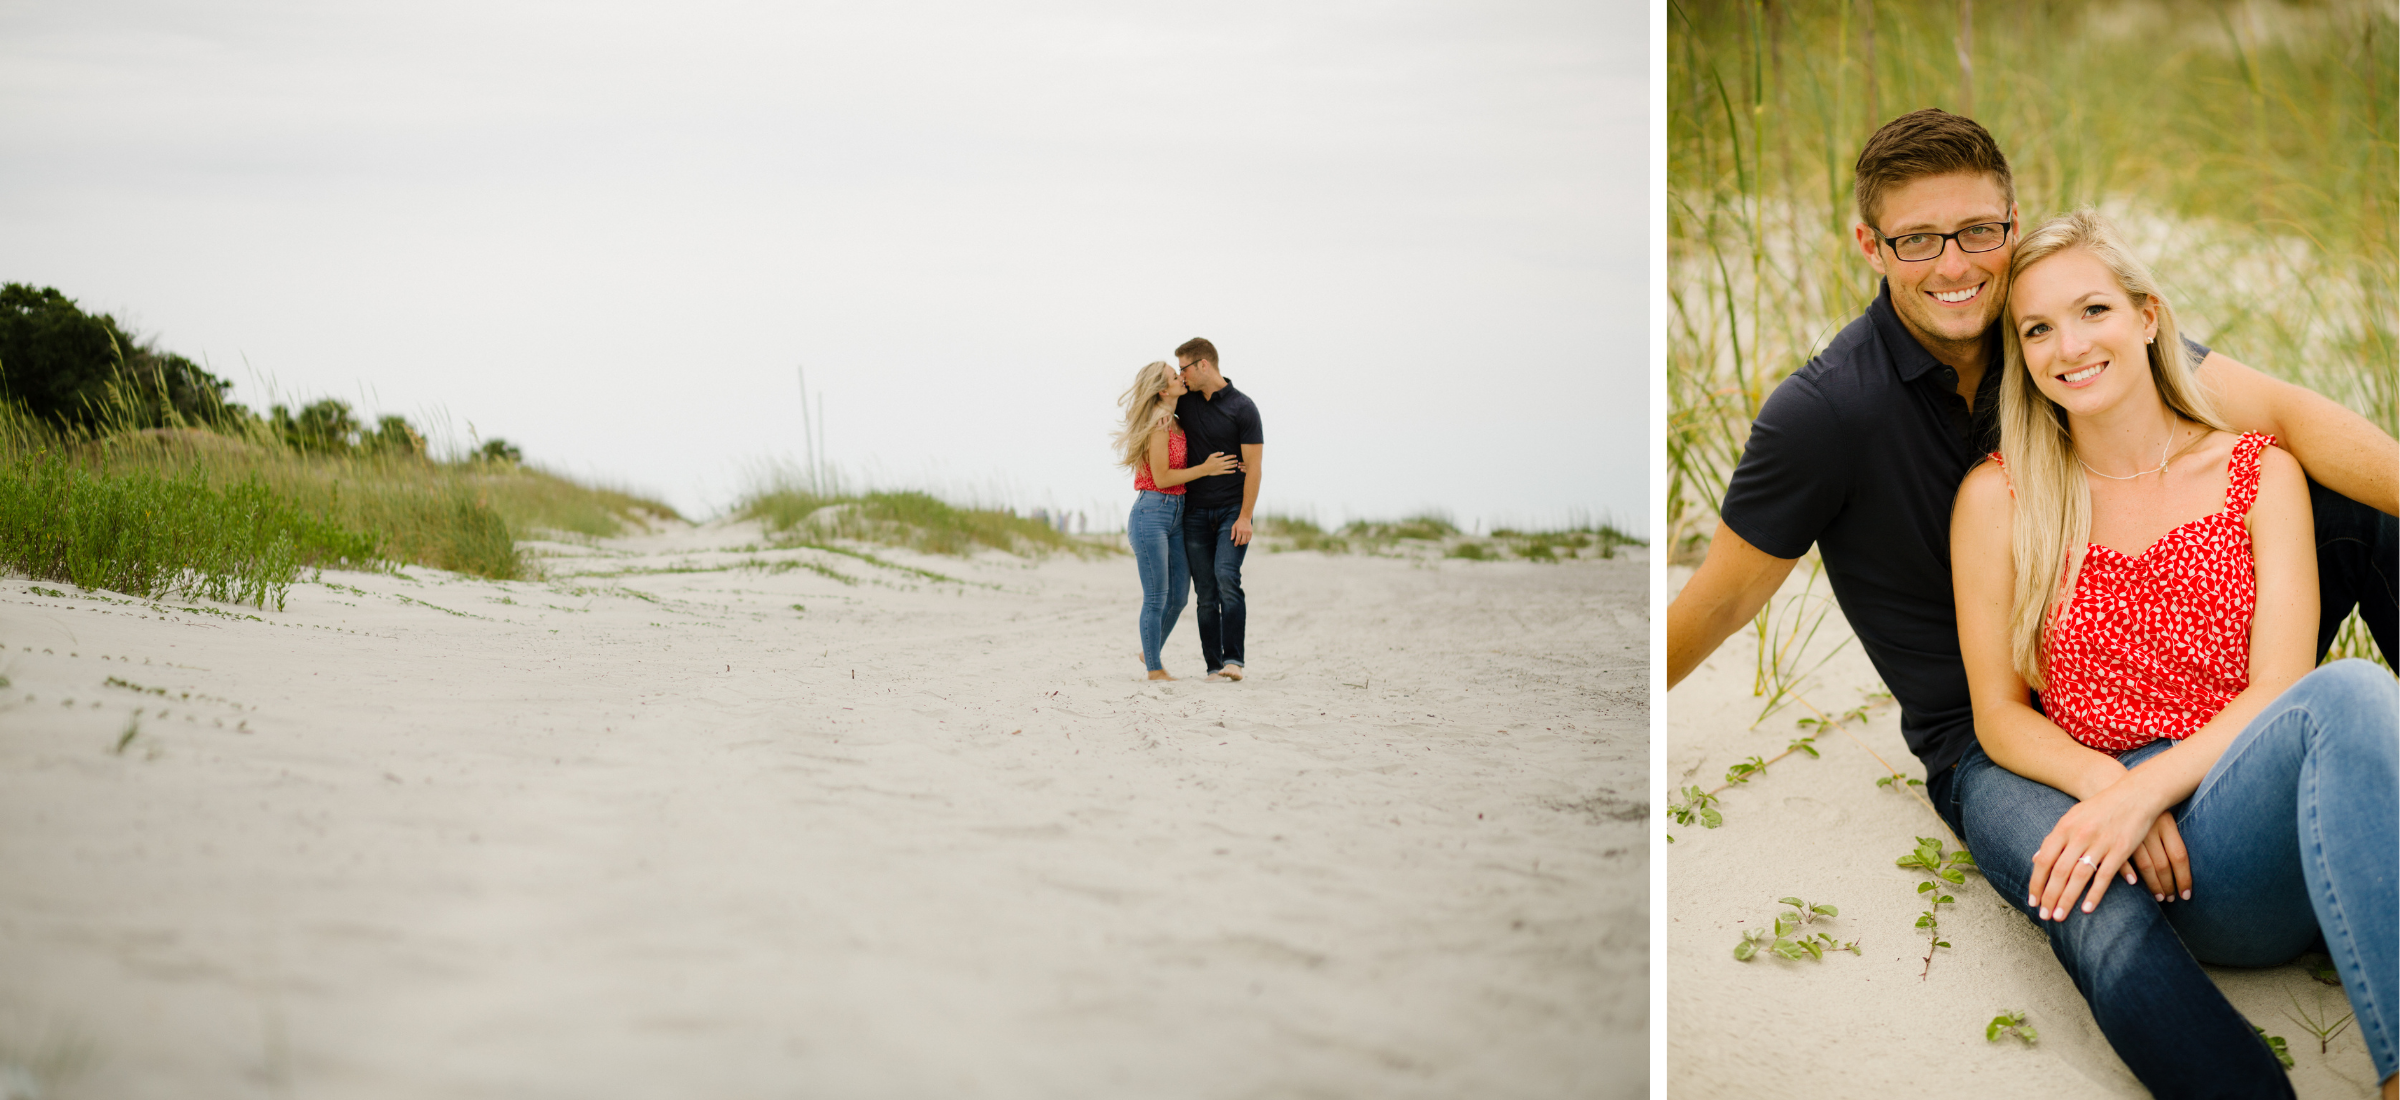 Engagement-Photo-Locations-Beach-Savannah-Verve-Event-Co.